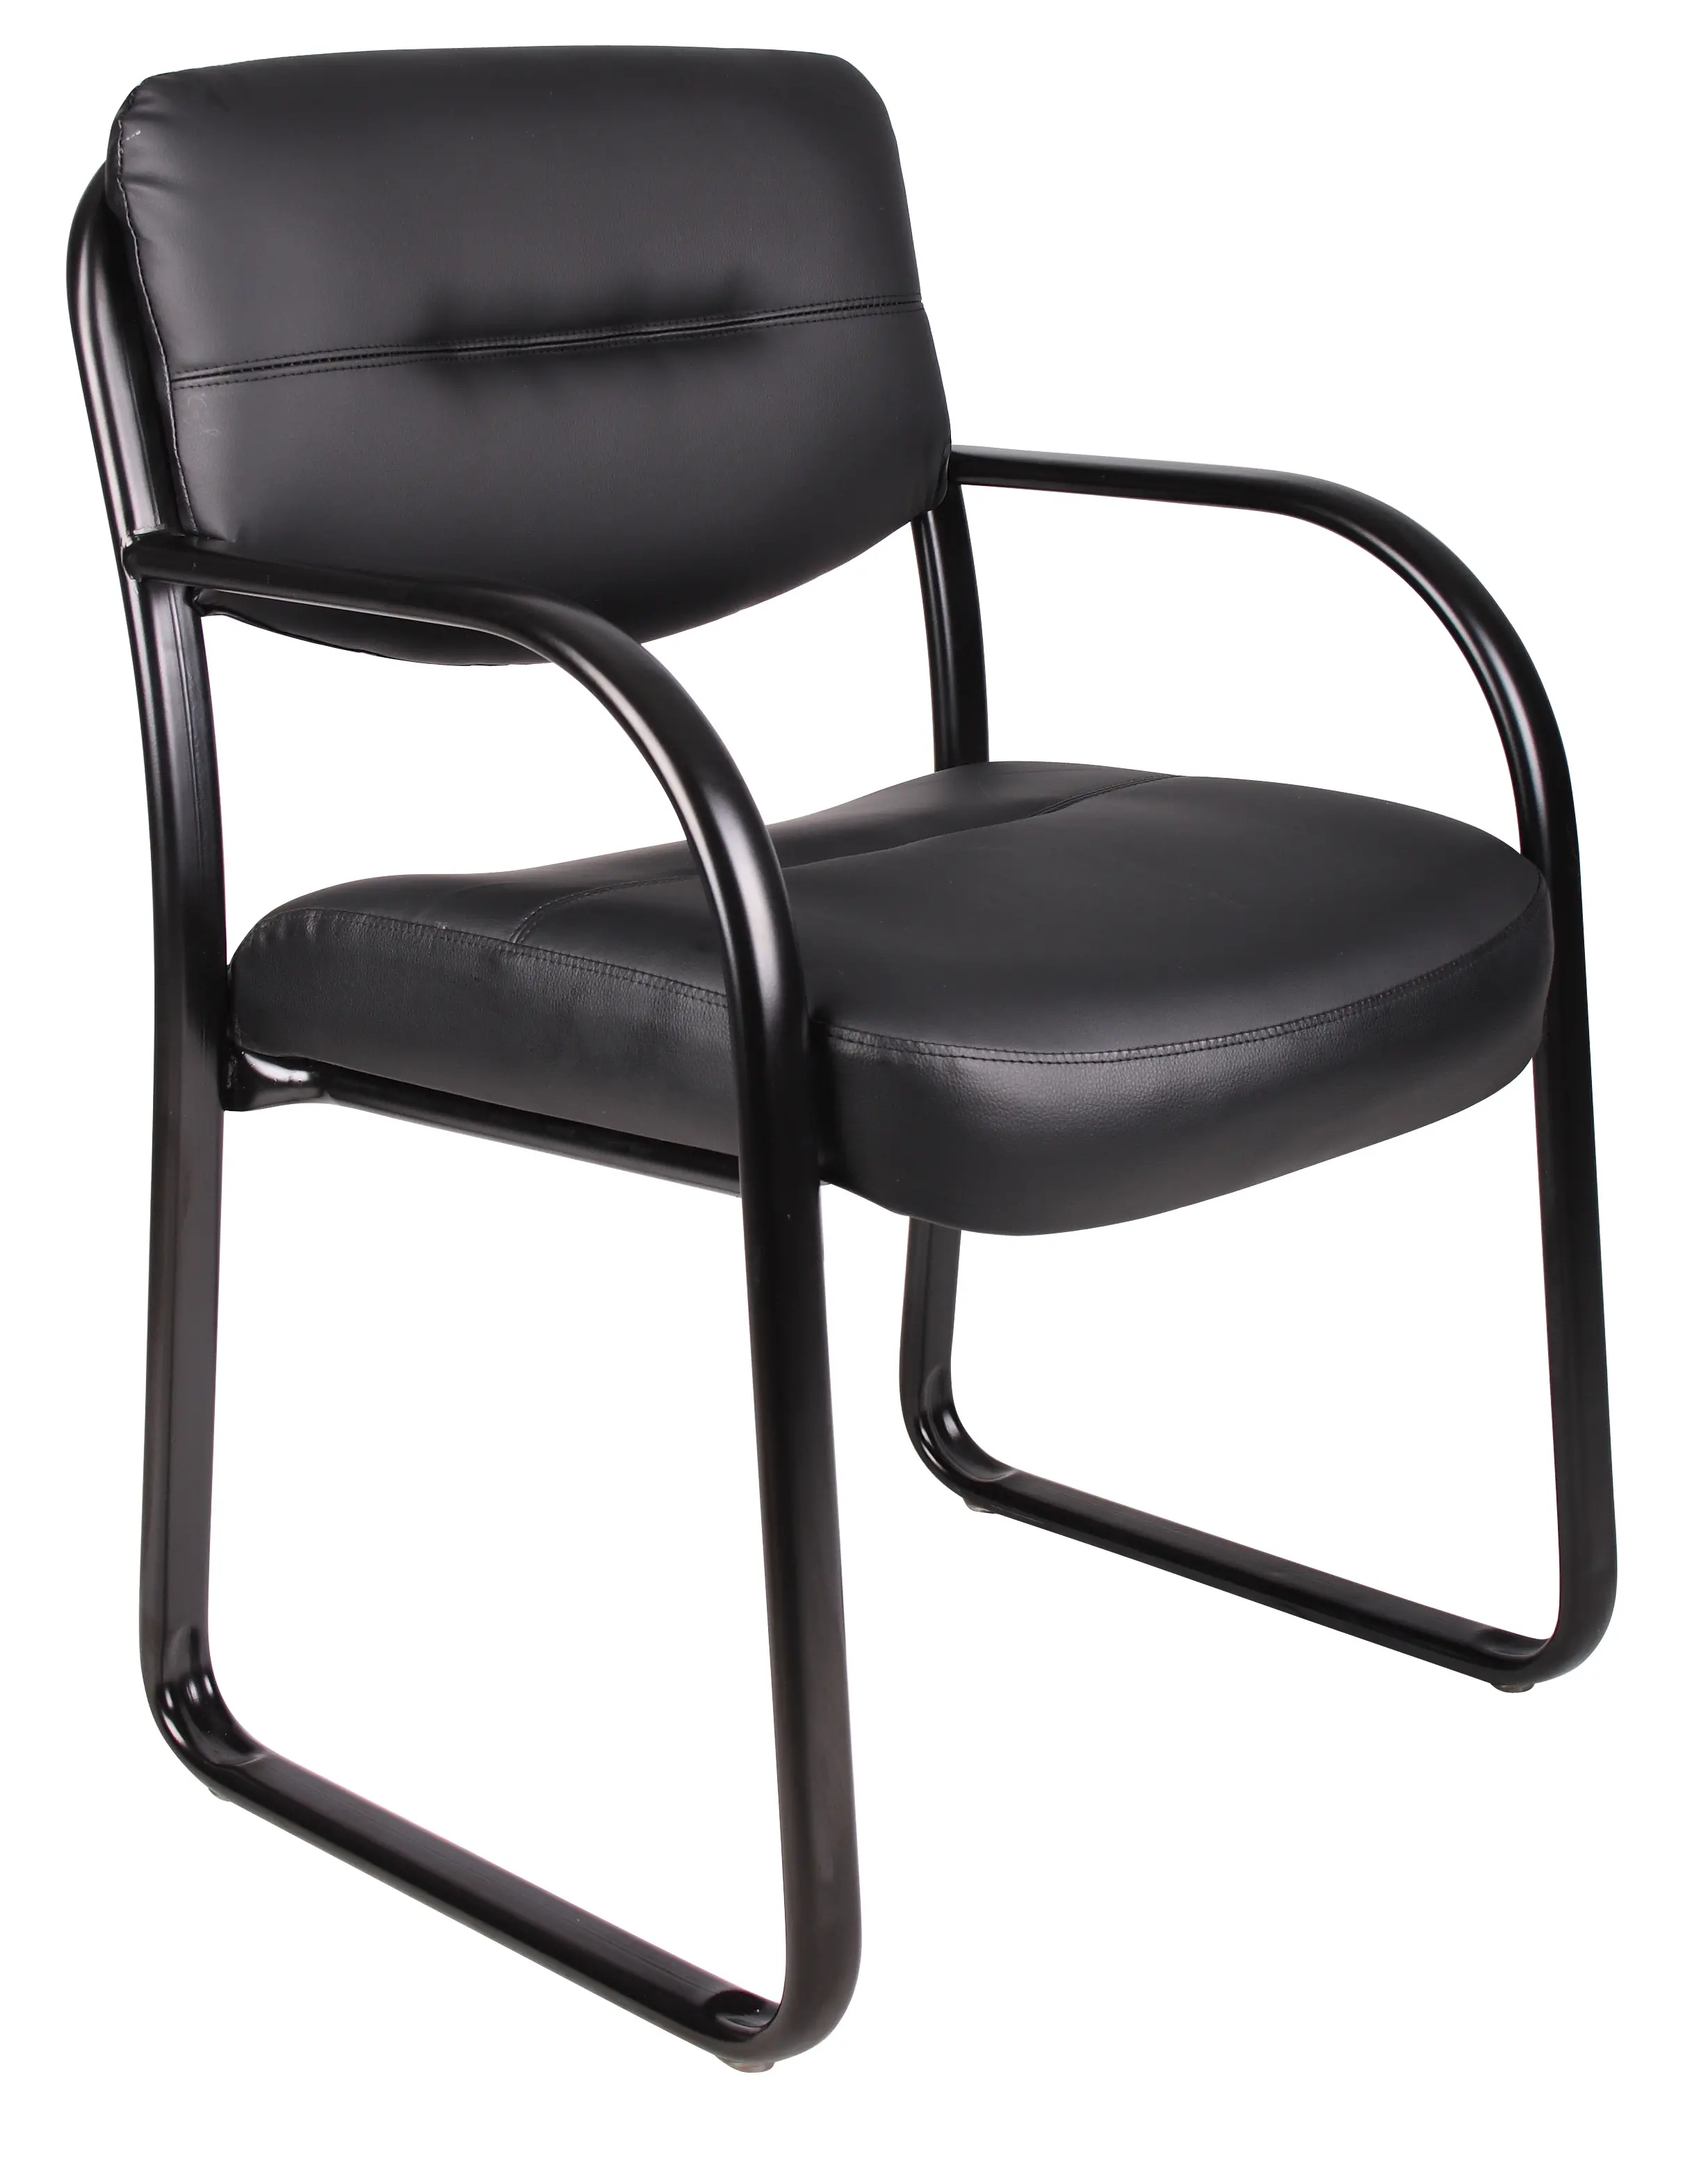 Upholstered Black Office Chair